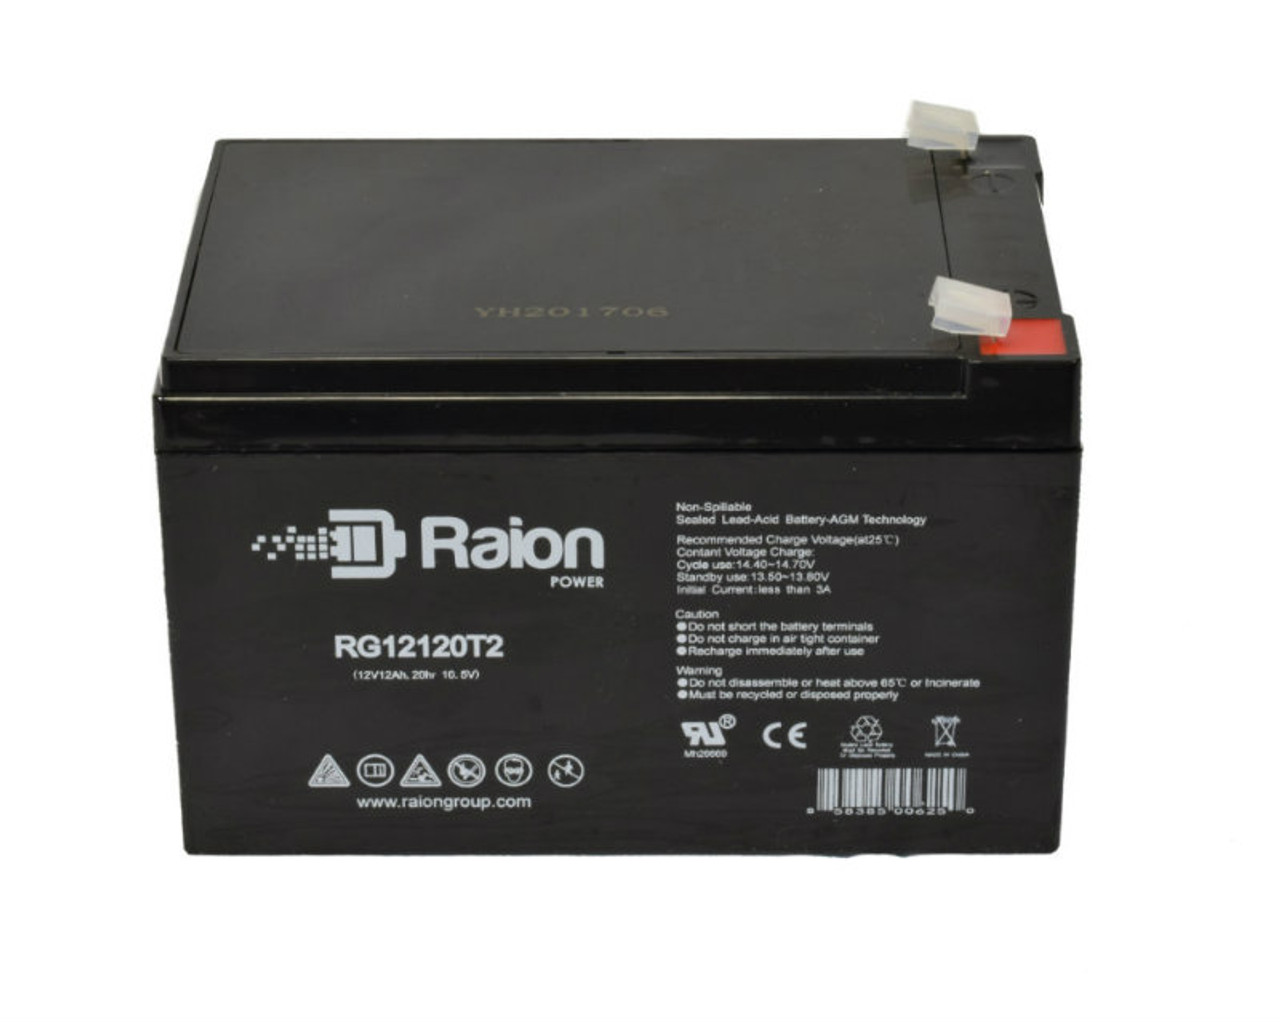 Raion Power RG12120T2 SLA Battery for Wilson w/ Remote & 2 Line